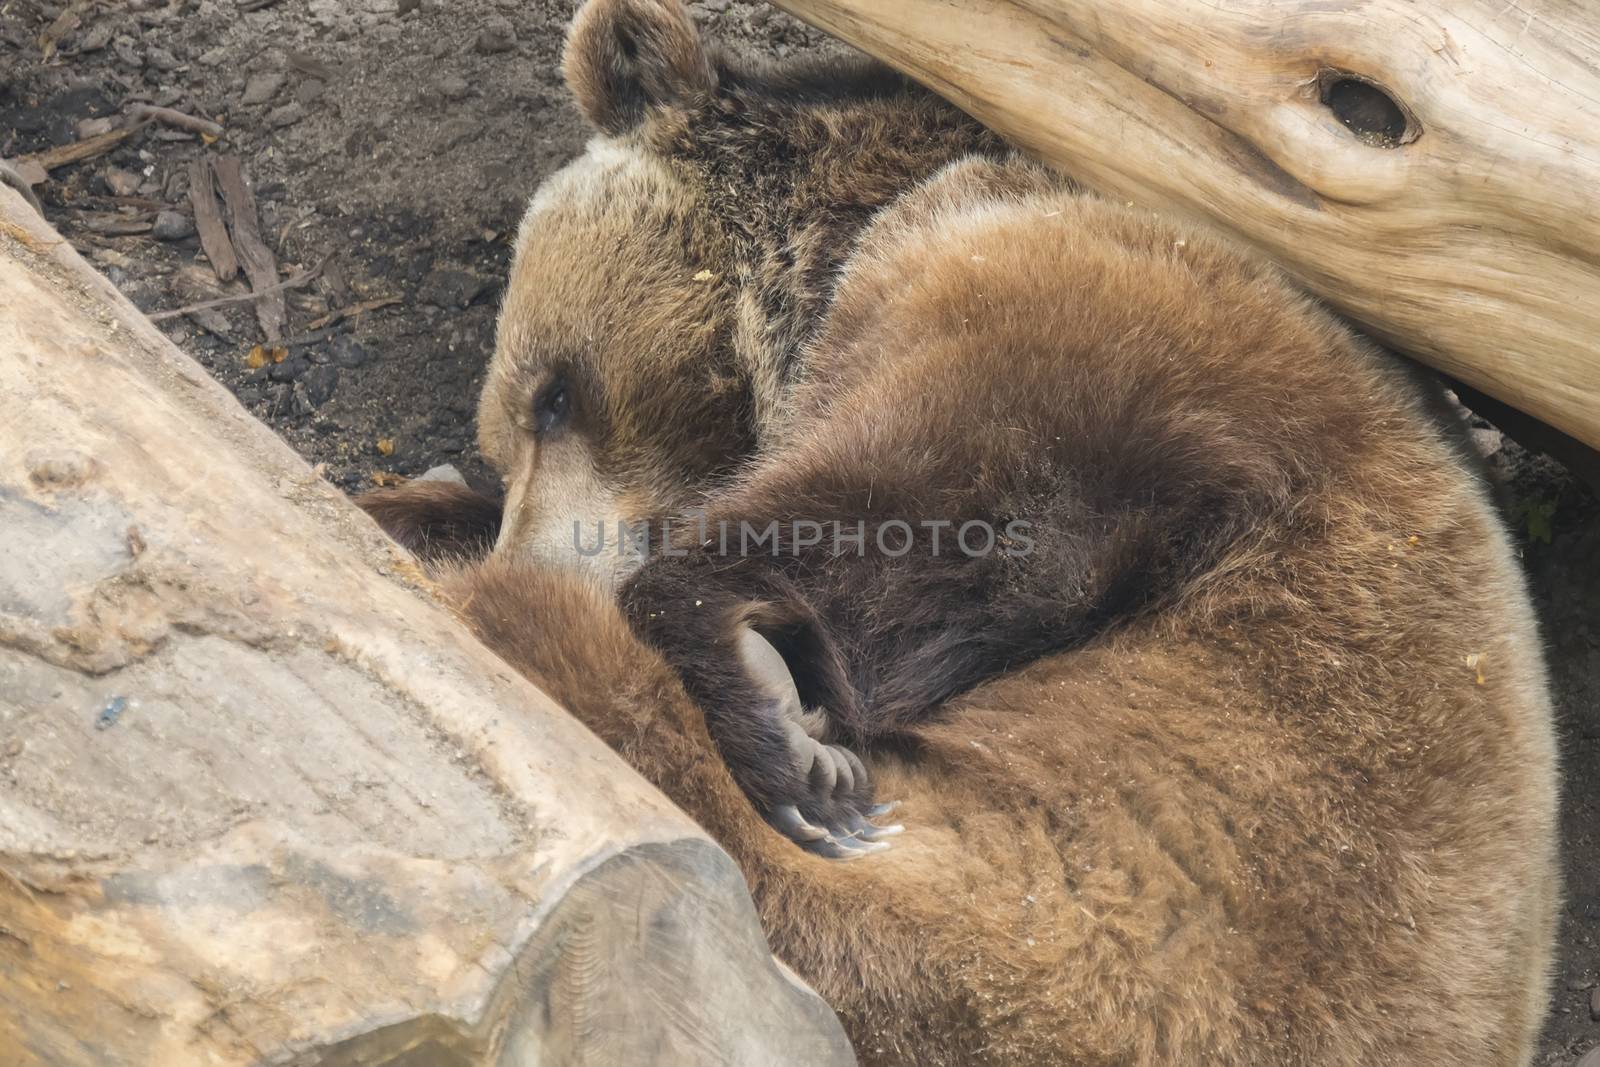 Brown bear sleeping among some trunks by max8xam